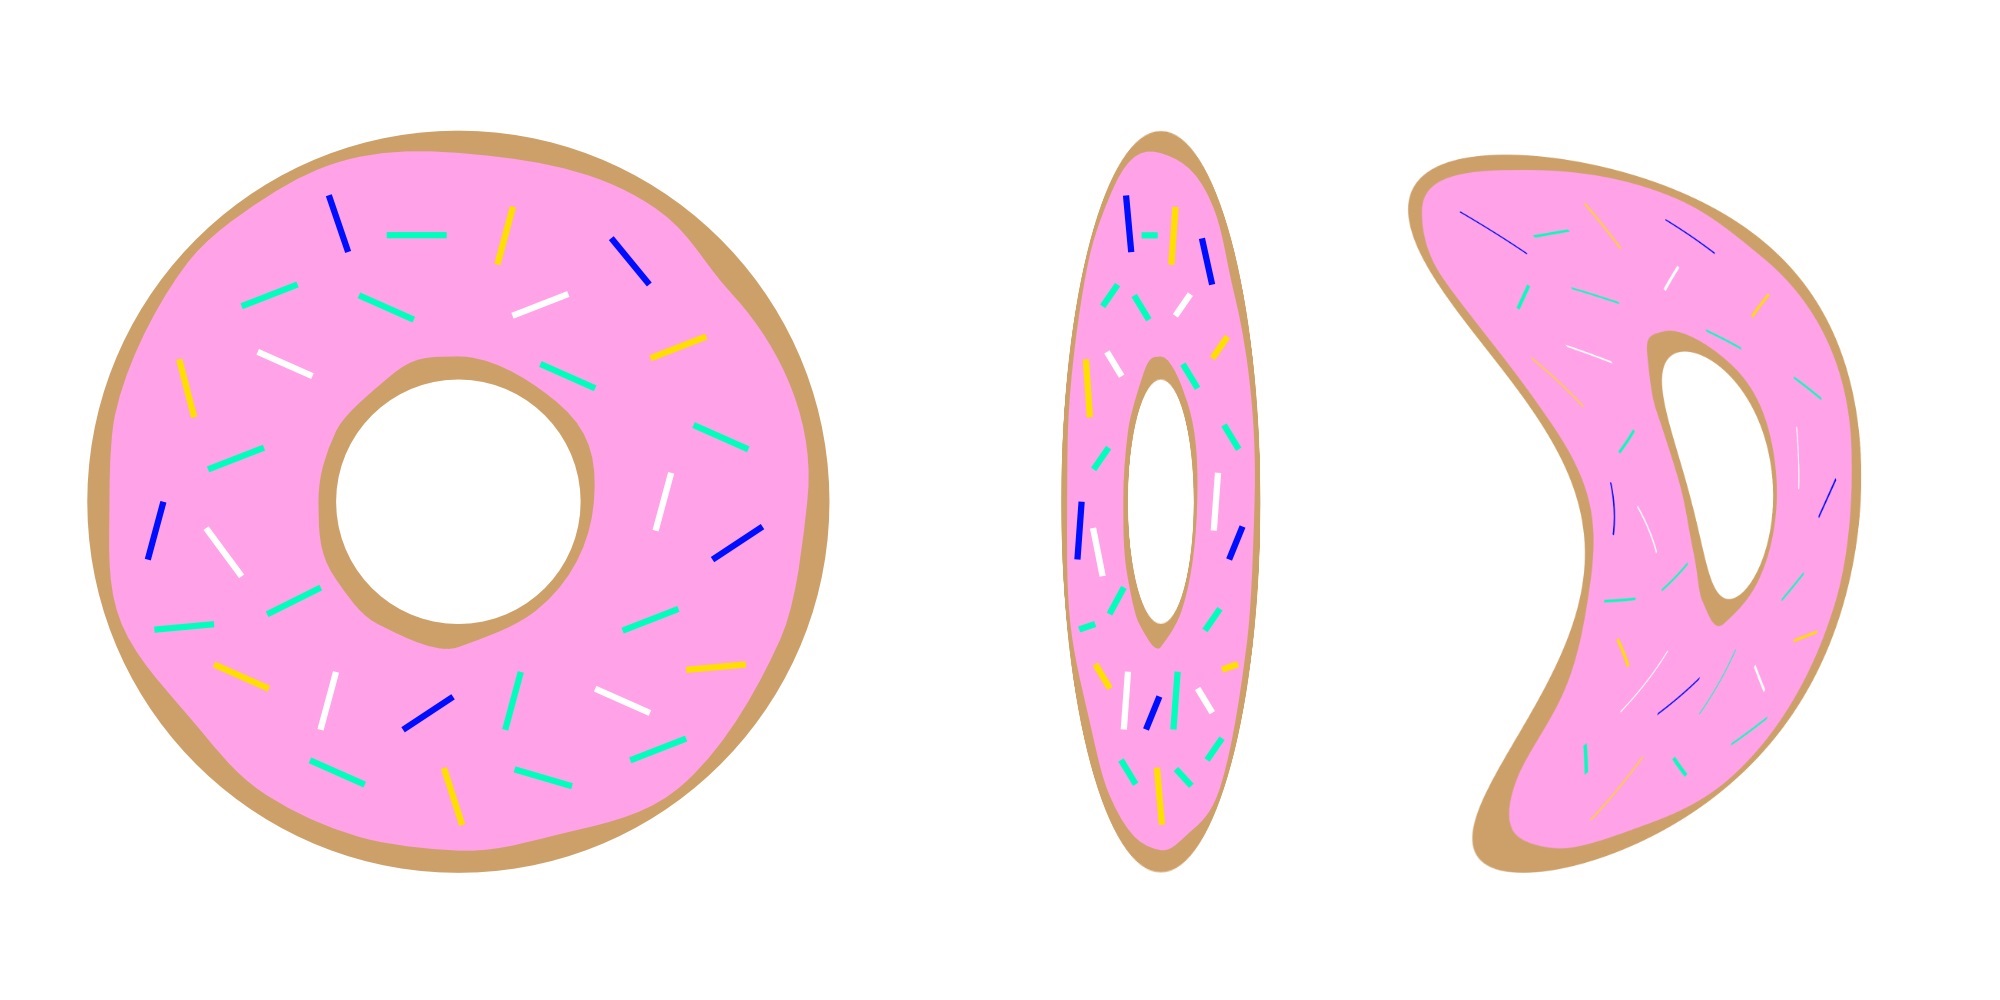 A doughnut under different geometric transformations